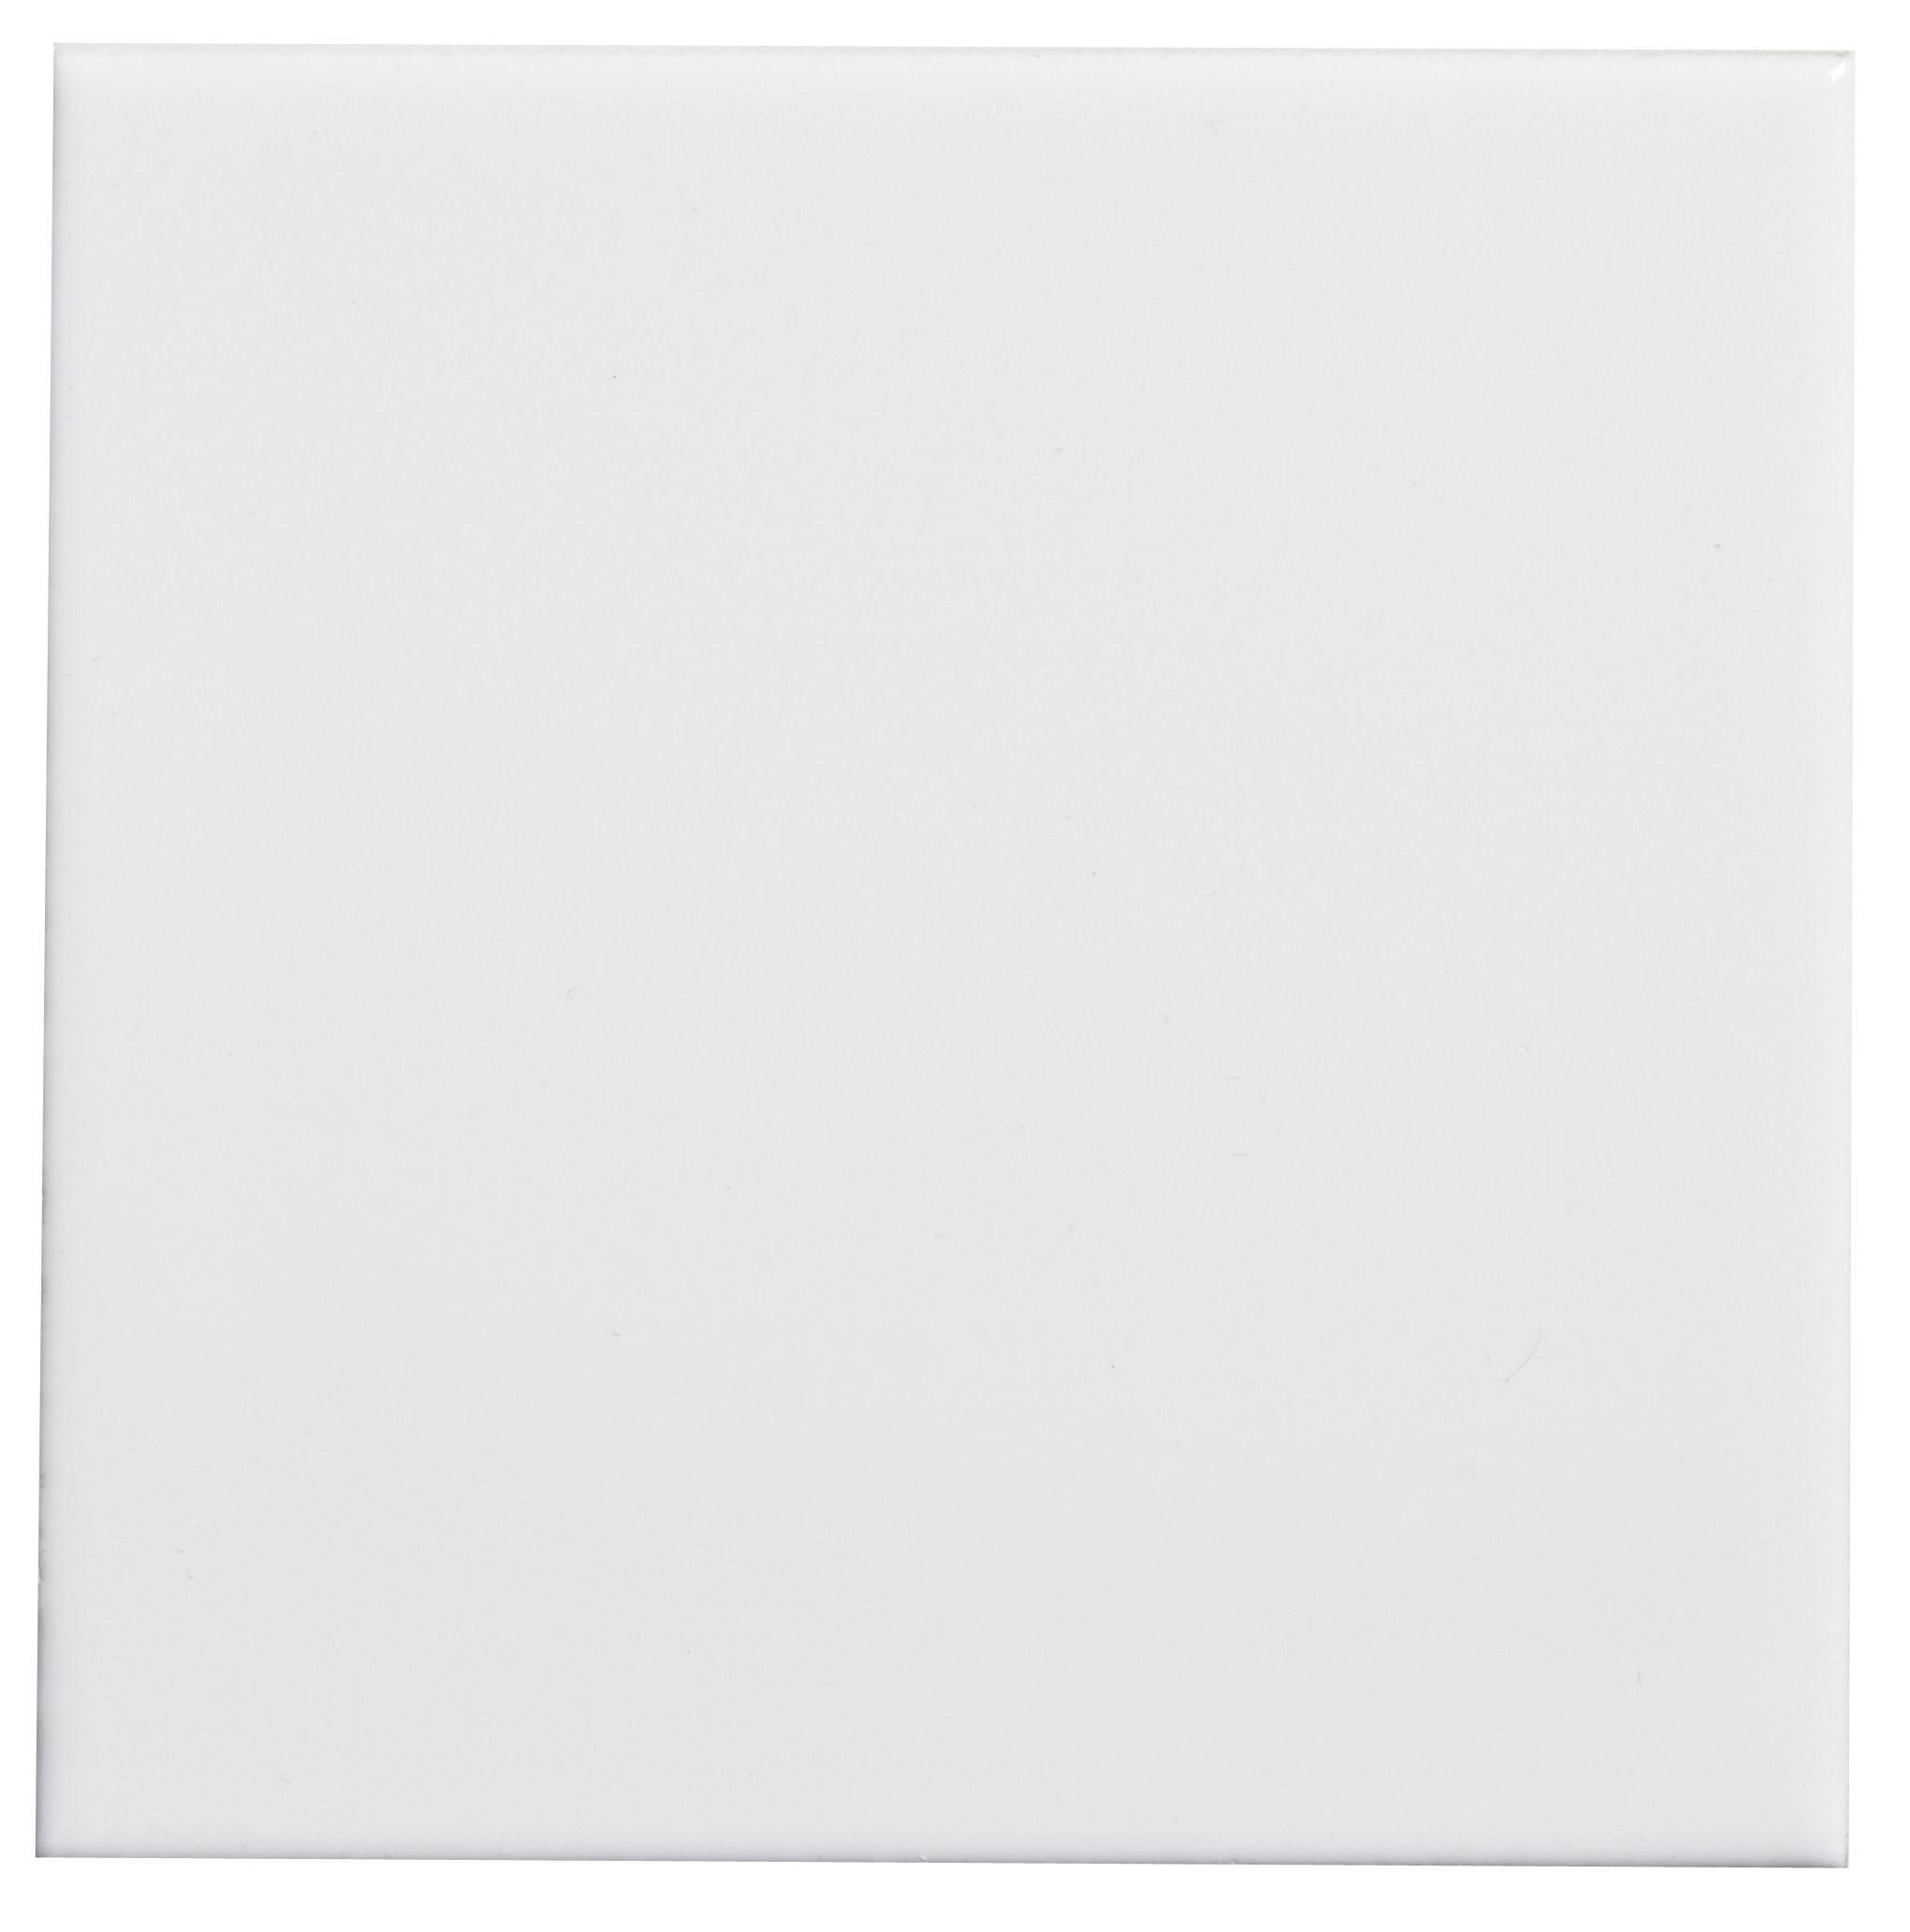 Sample Cotswold Gloss White Tiles 100mm 100mm Selling Per M2 100 Tiles Per M2